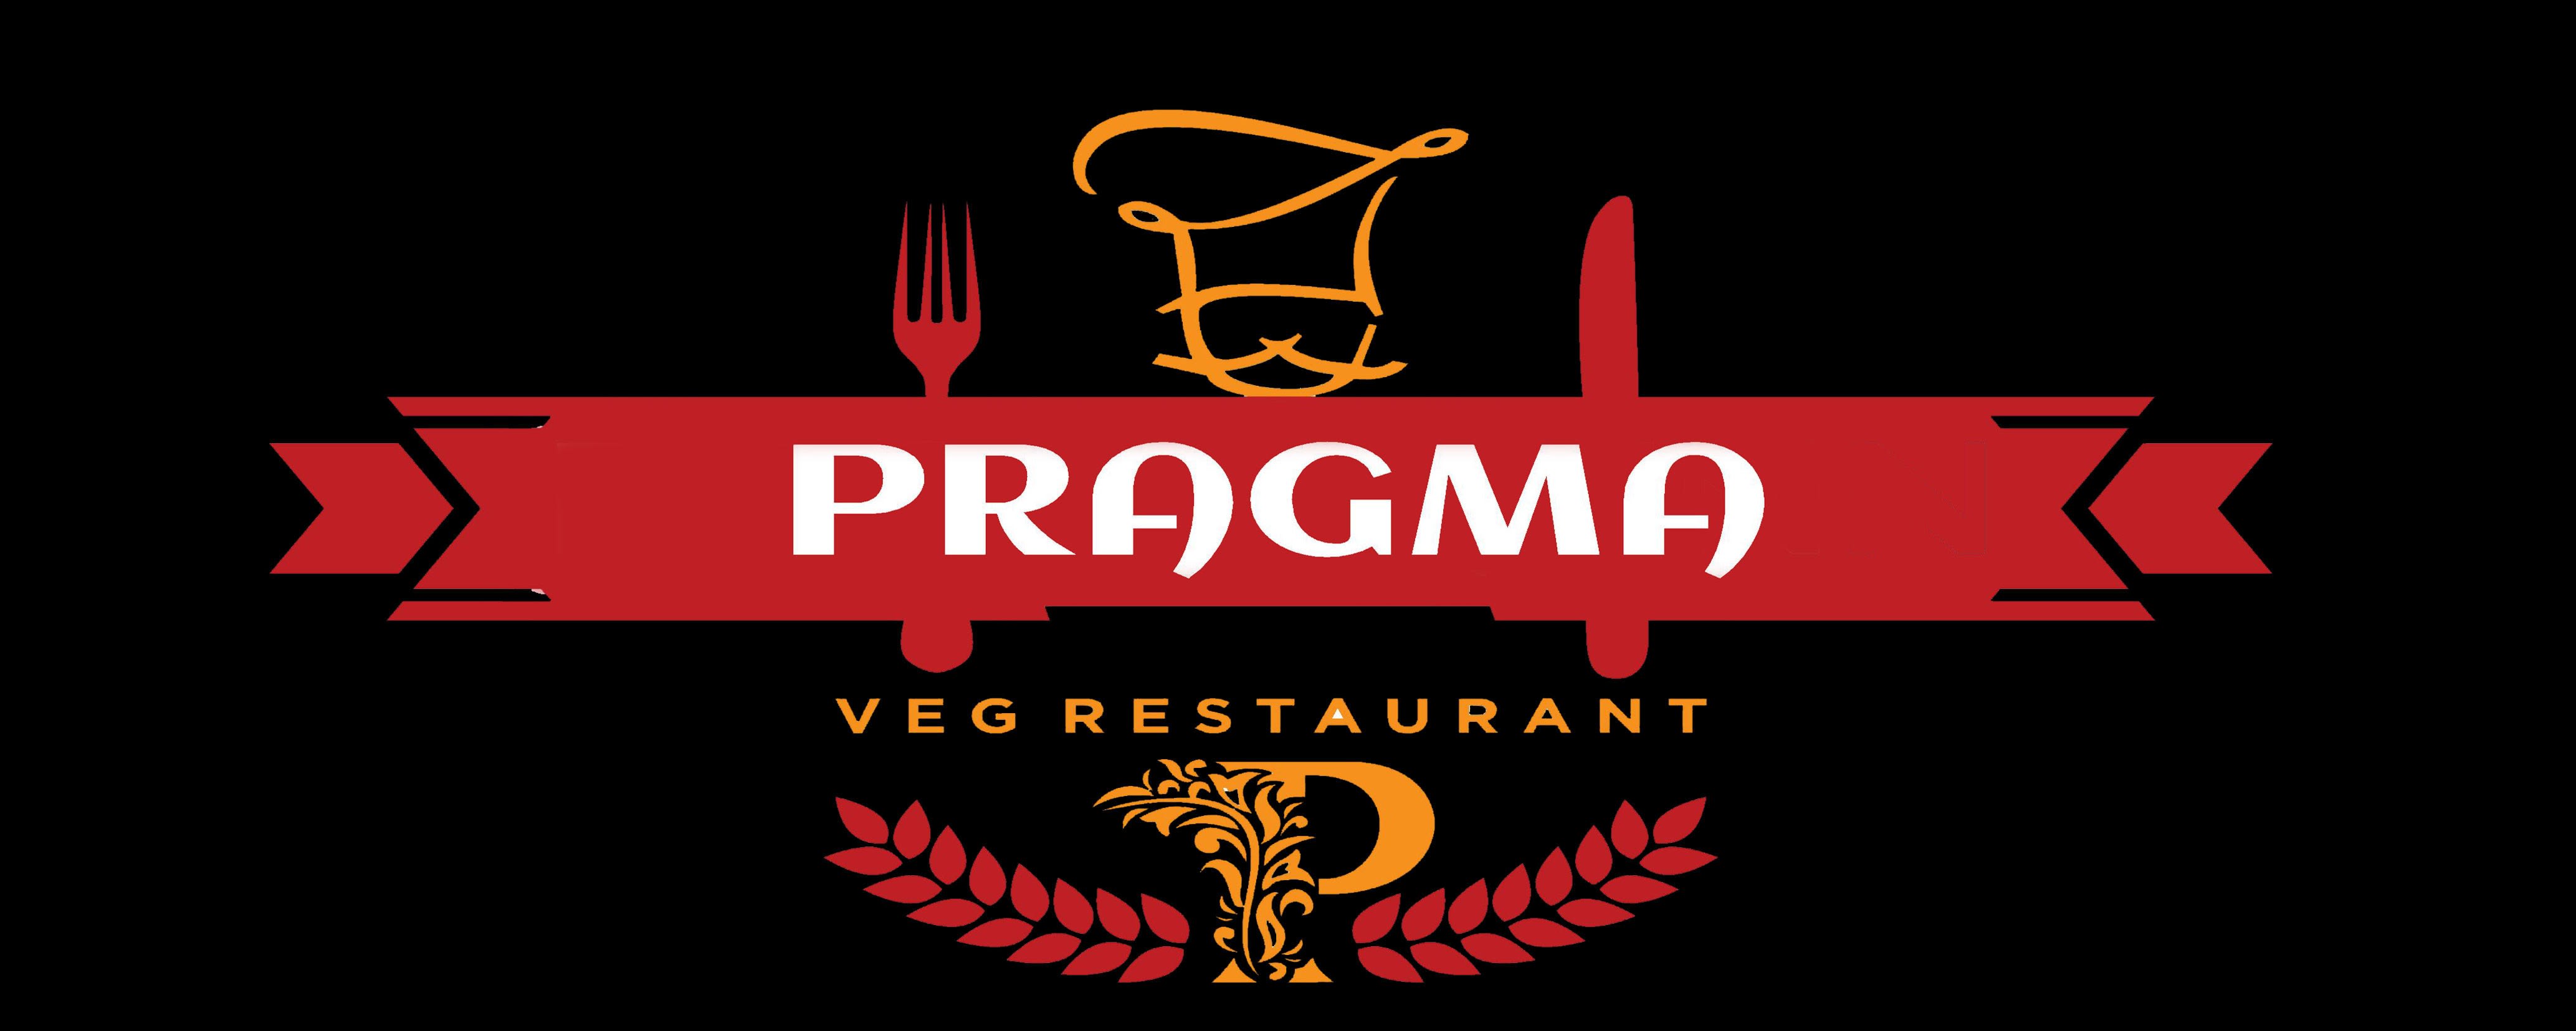 Pragma Veg Restaurant